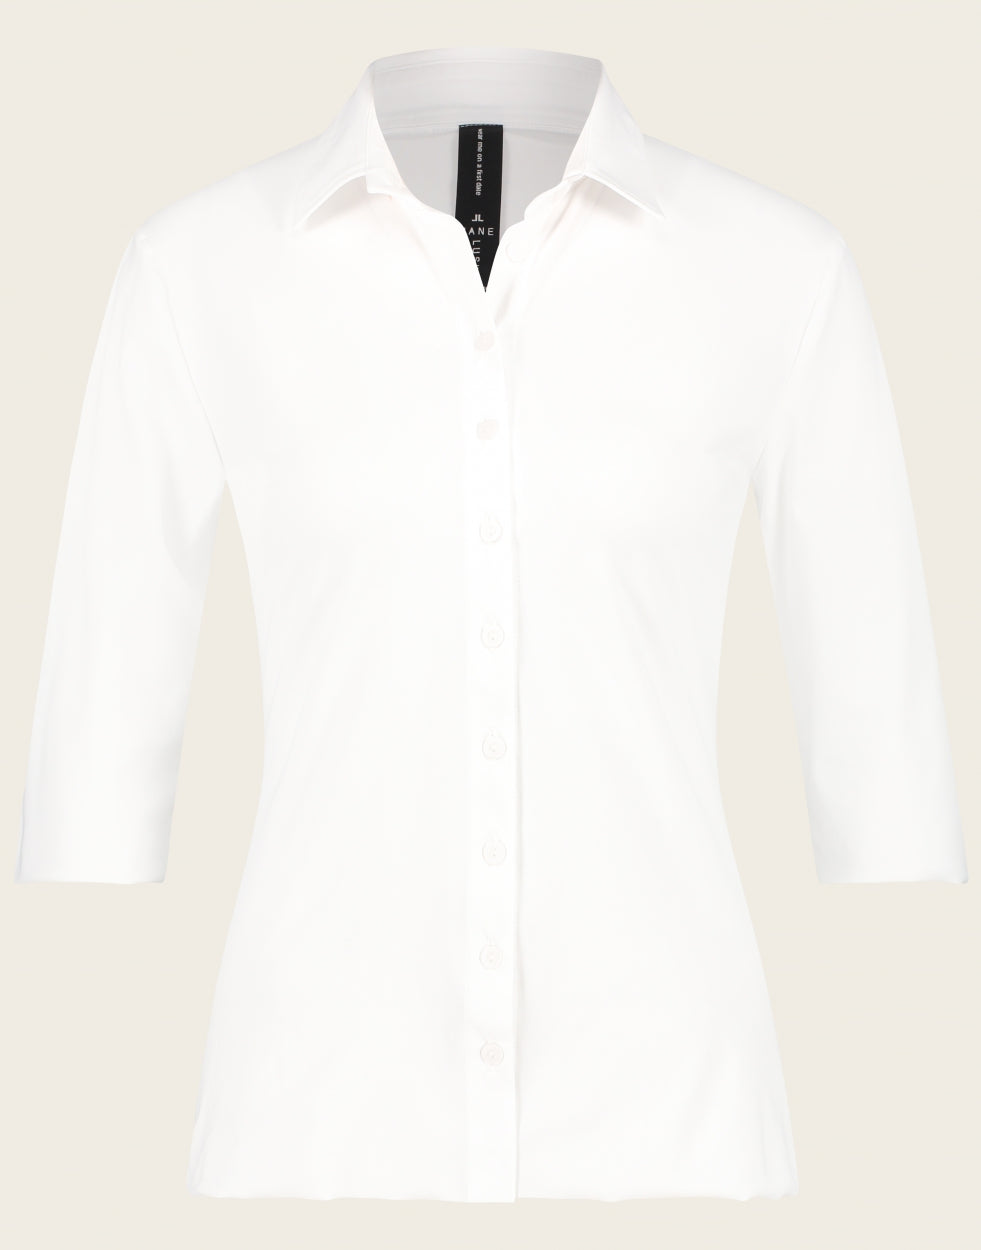 Blouse Kikkie Technical Jersey | White